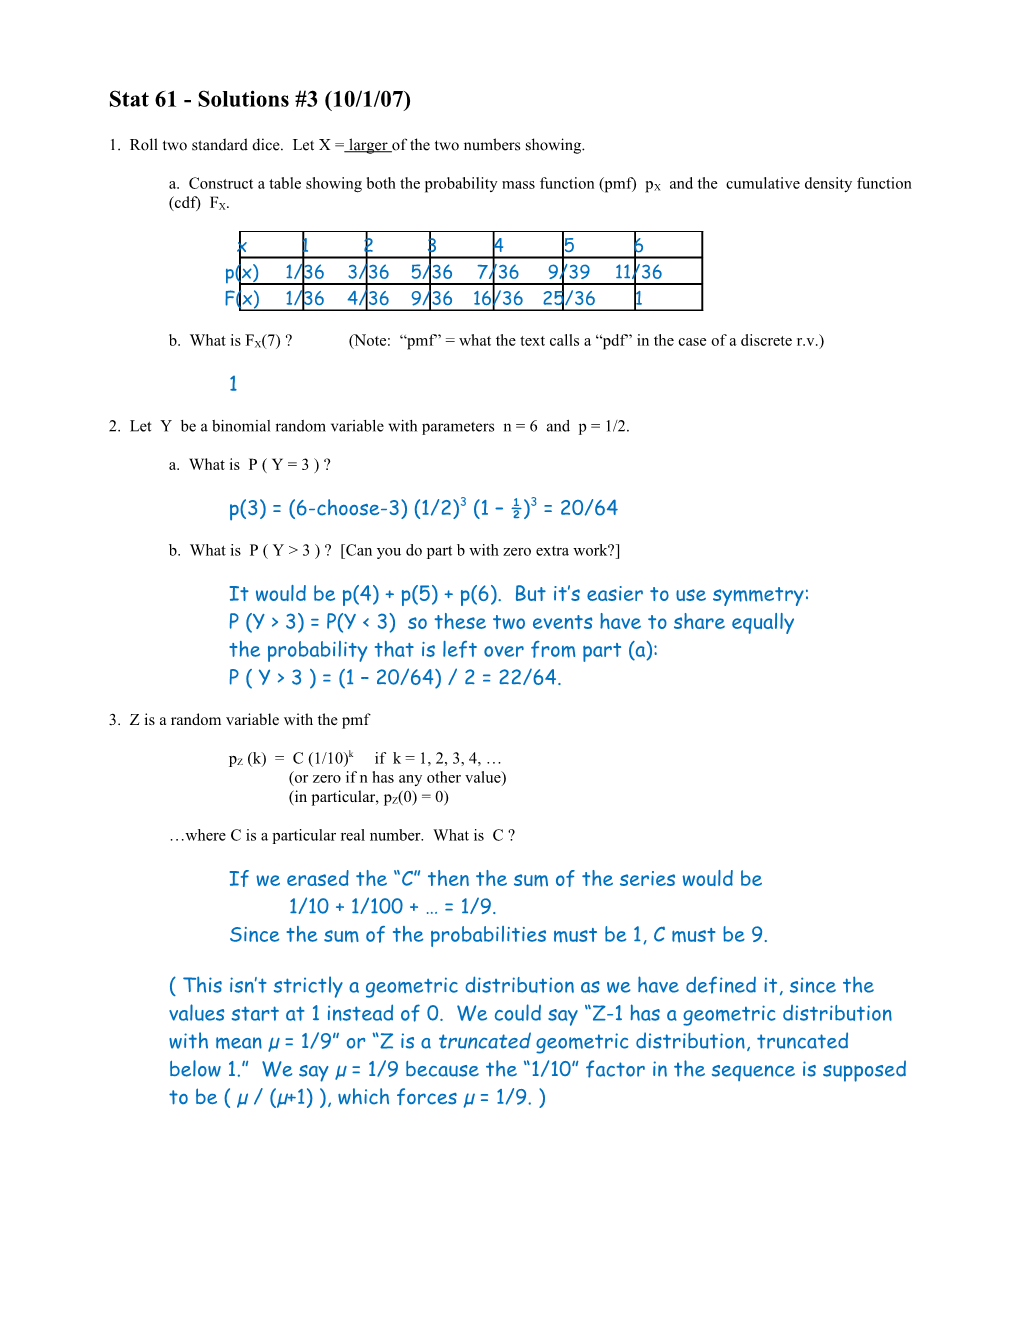 Stat 53 - Homework #1 (8/30/05; Due 9/6/05)